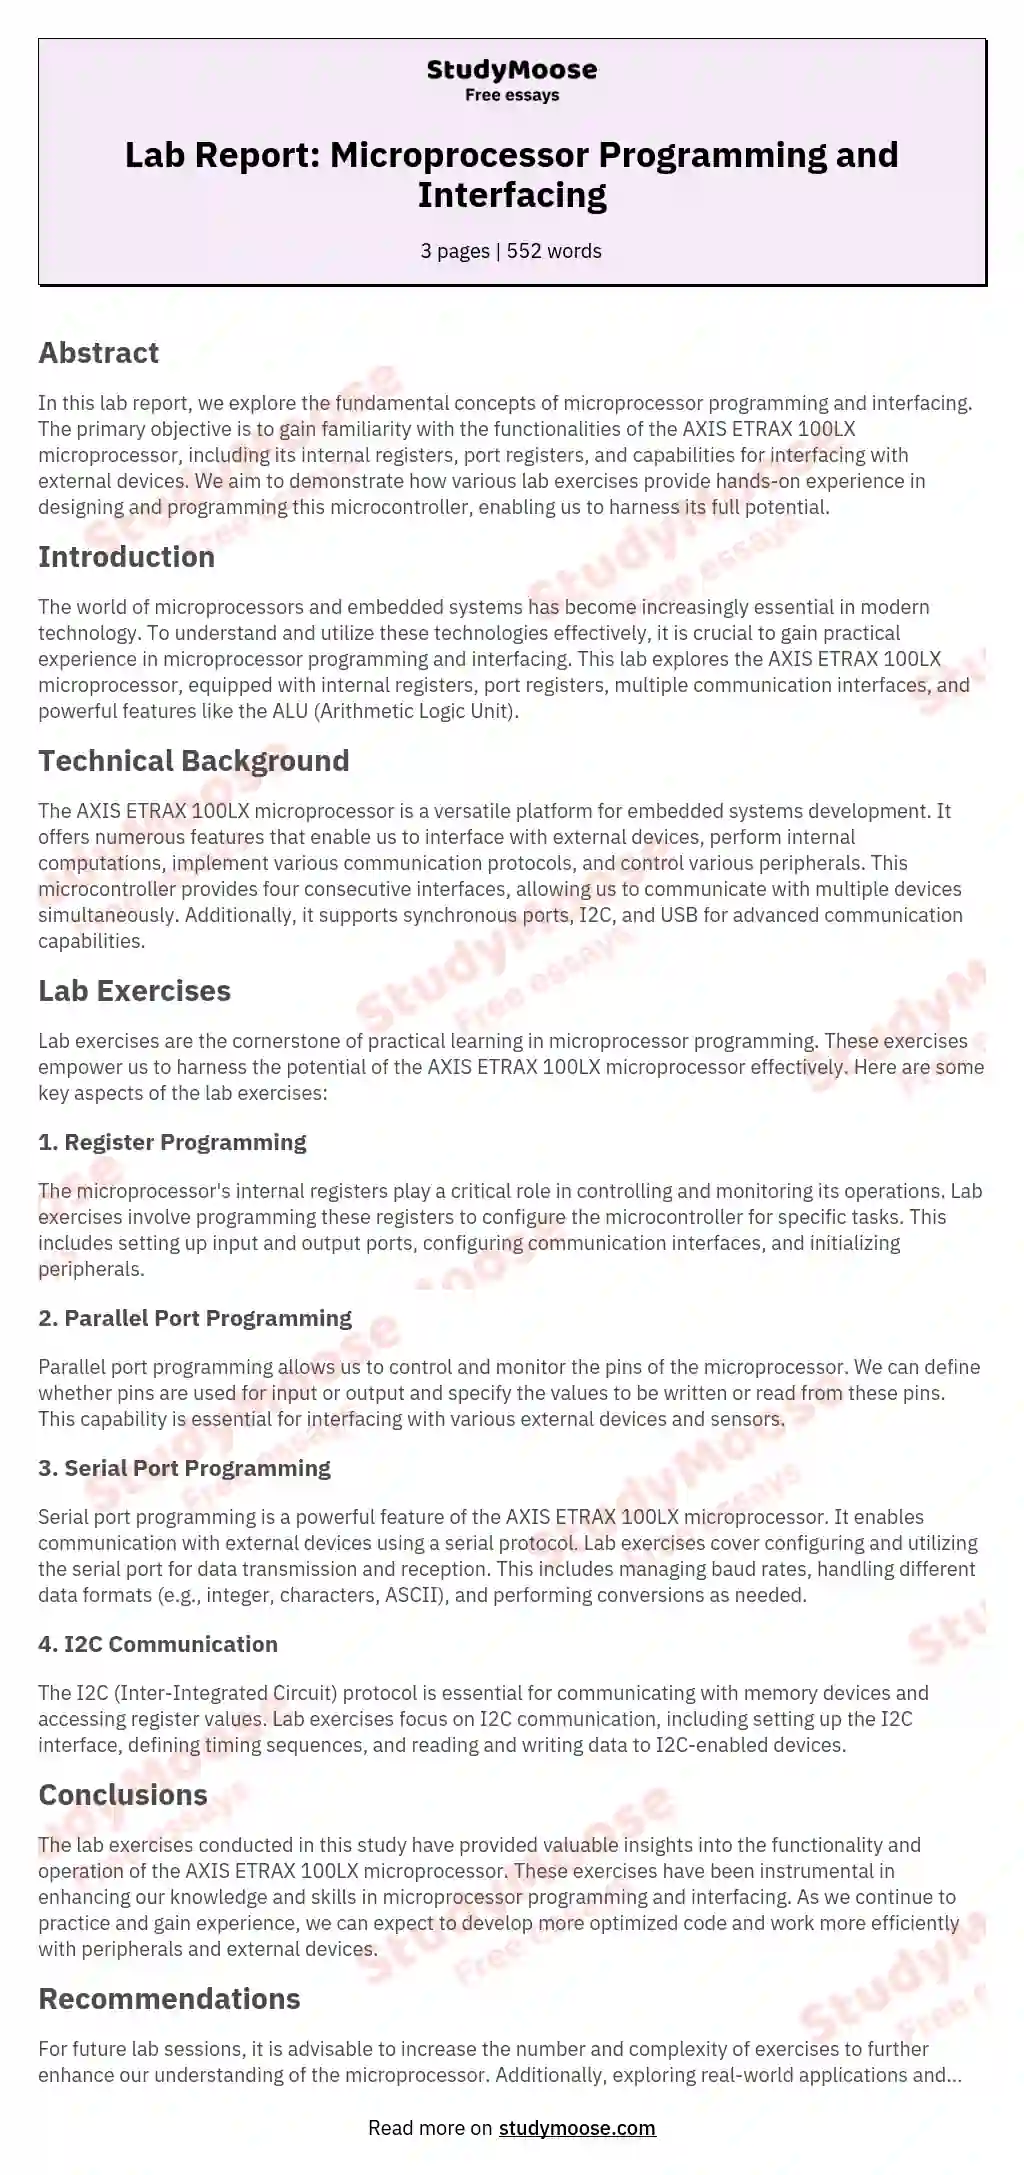 Lab Report: Microprocessor Programming and Interfacing essay